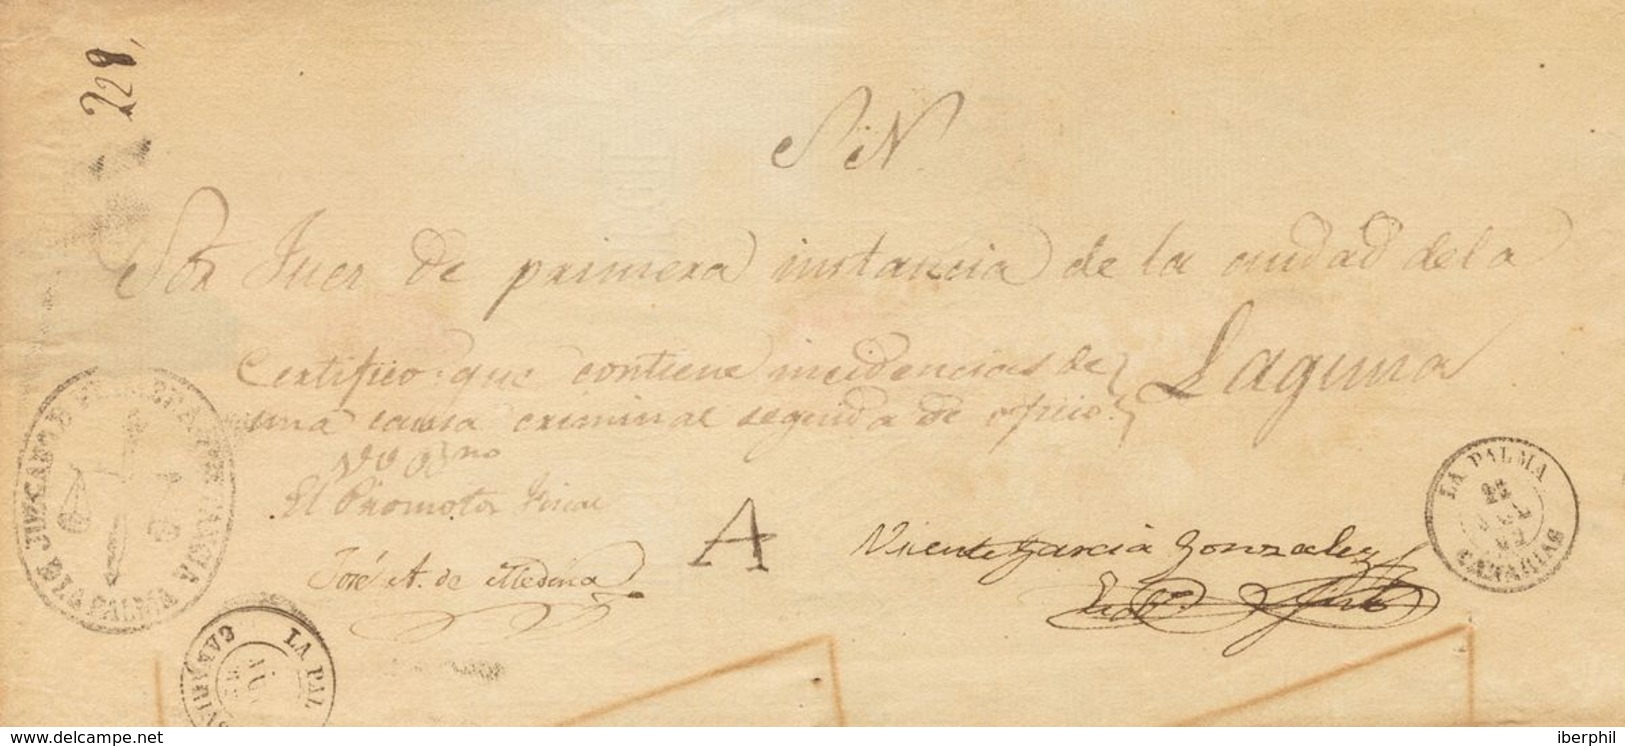 Prefilatelia, Canarias. Sobre. 1862. Frente De Plica Judicial De LA PALMA A LA LAGUNA. Marca "A", De Abono Manuscrita, S - ...-1850 Prefilatelia